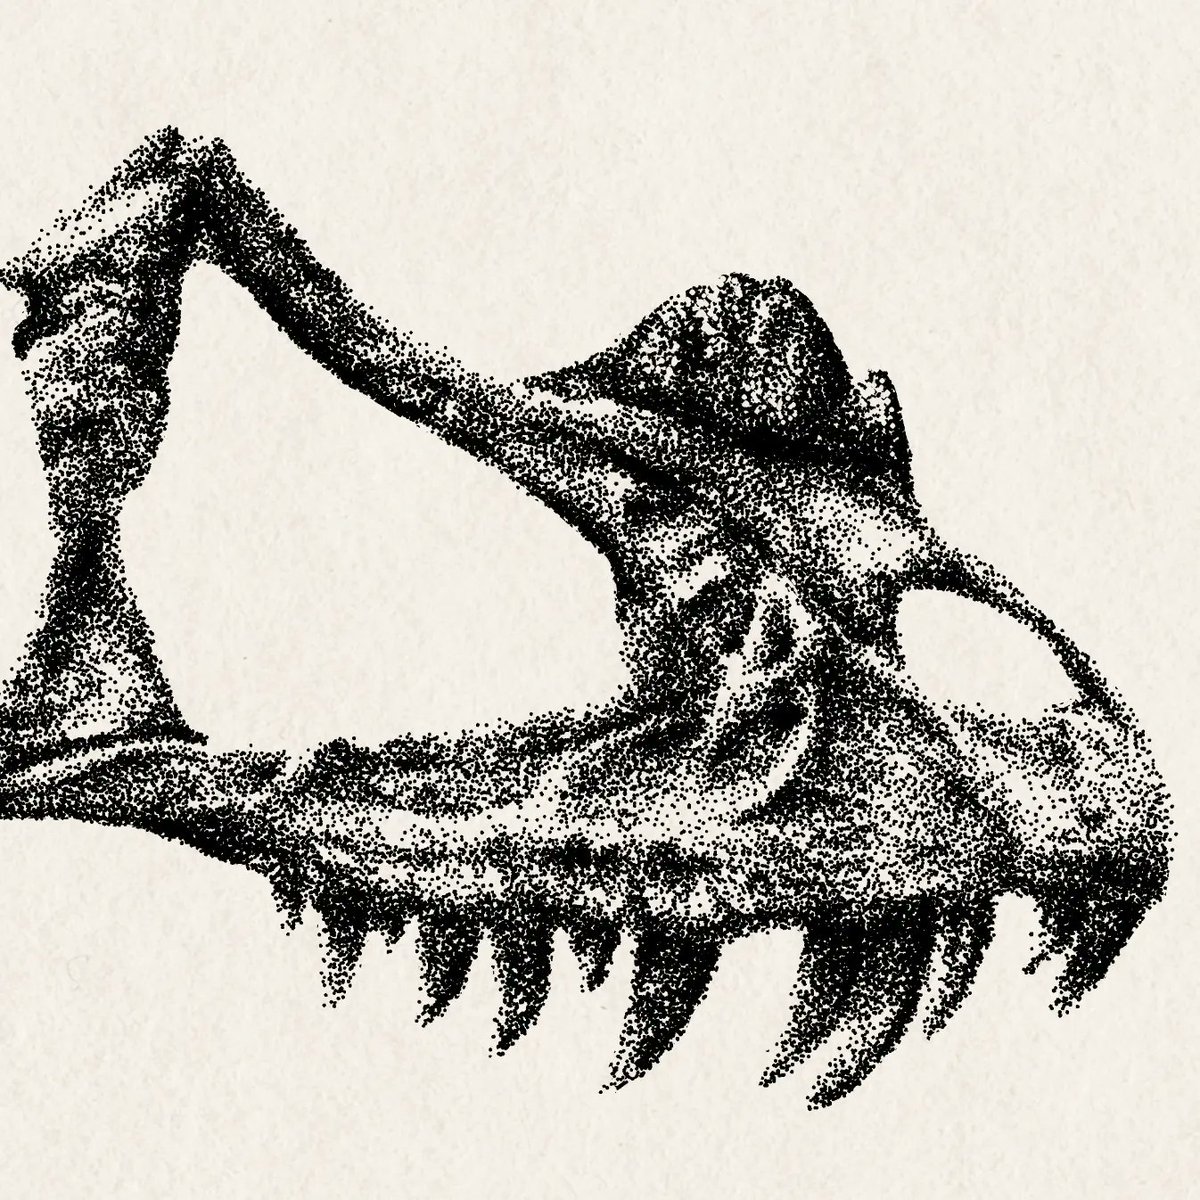 🦖 𝘊𝘦𝘳𝘢𝘵𝘰𝘴𝘢𝘶𝘳𝘶𝘴 𝘯𝘢𝘴𝘪𝘤𝘰𝘳𝘯𝘪𝘴 skull

#ceratosaurus #ceratosaurusskull #paleoillustration #paleoillustrator #dotart #digitalart #madeinaffinity #madewithaffinityphoto